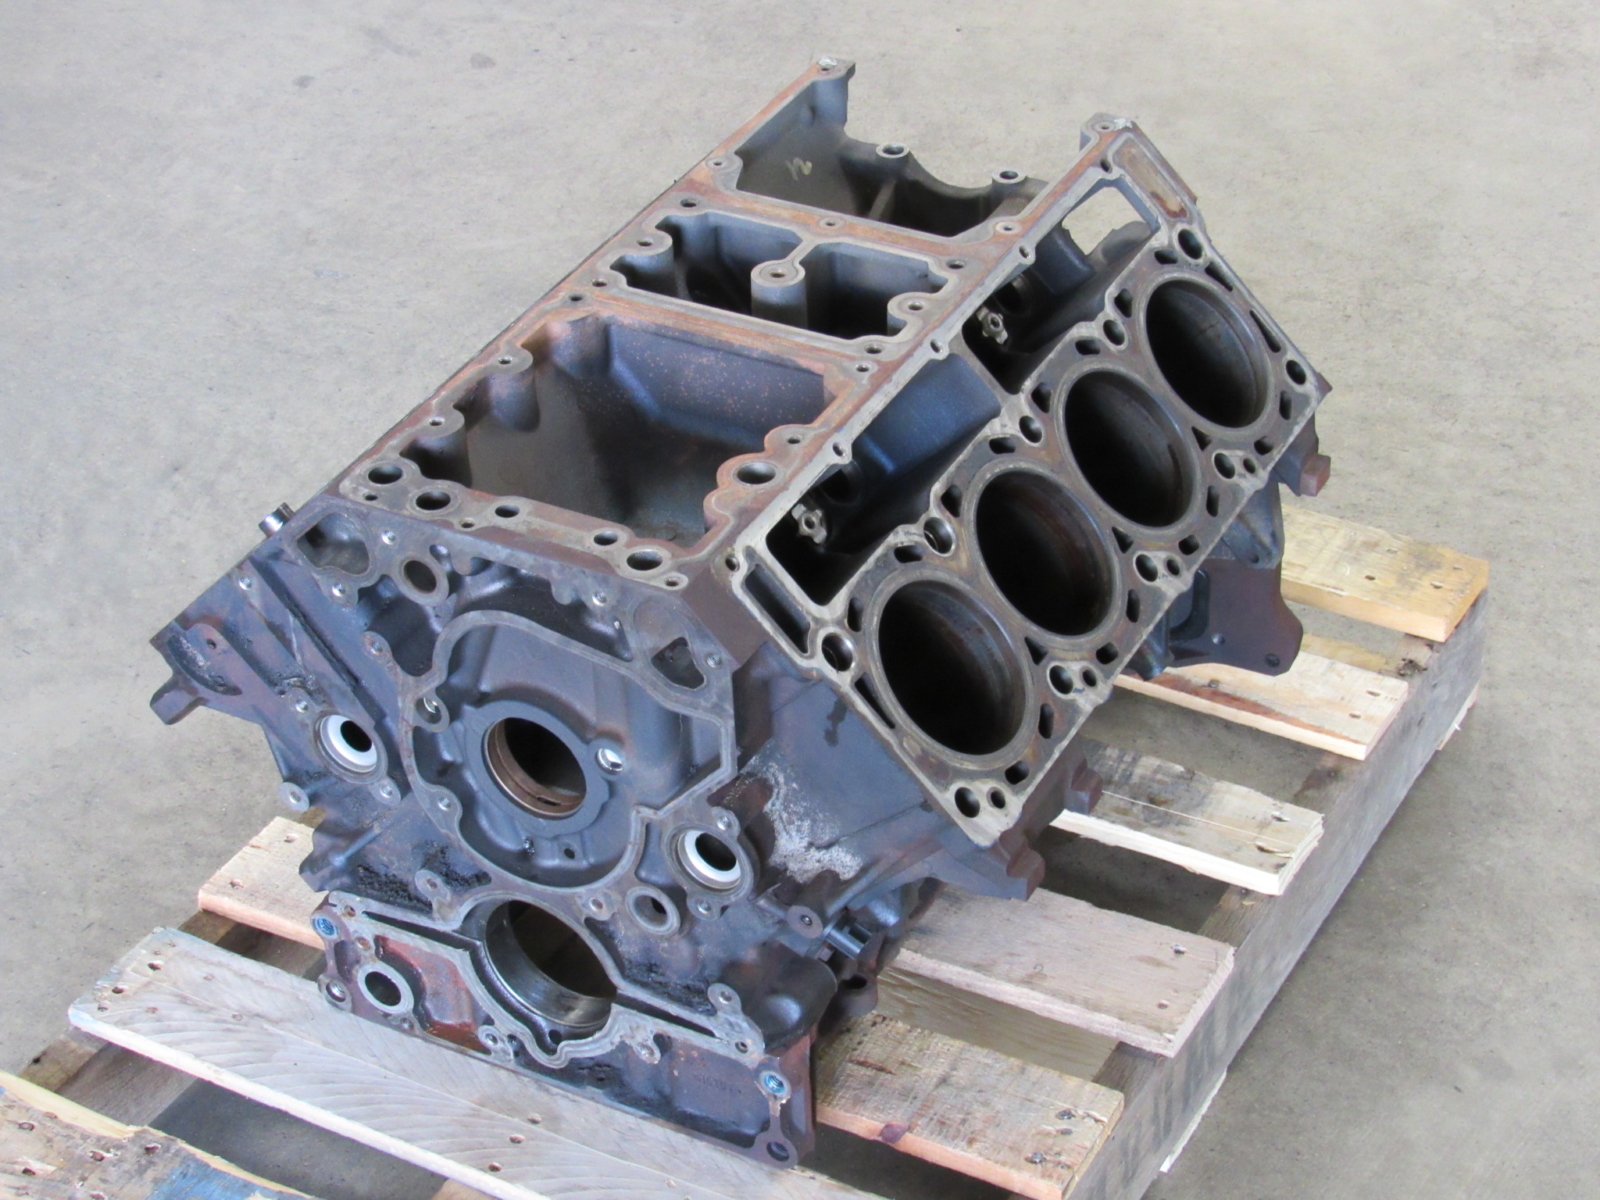 2009 Ford F-350 Specs: 6.4L V8 Diesel Engine